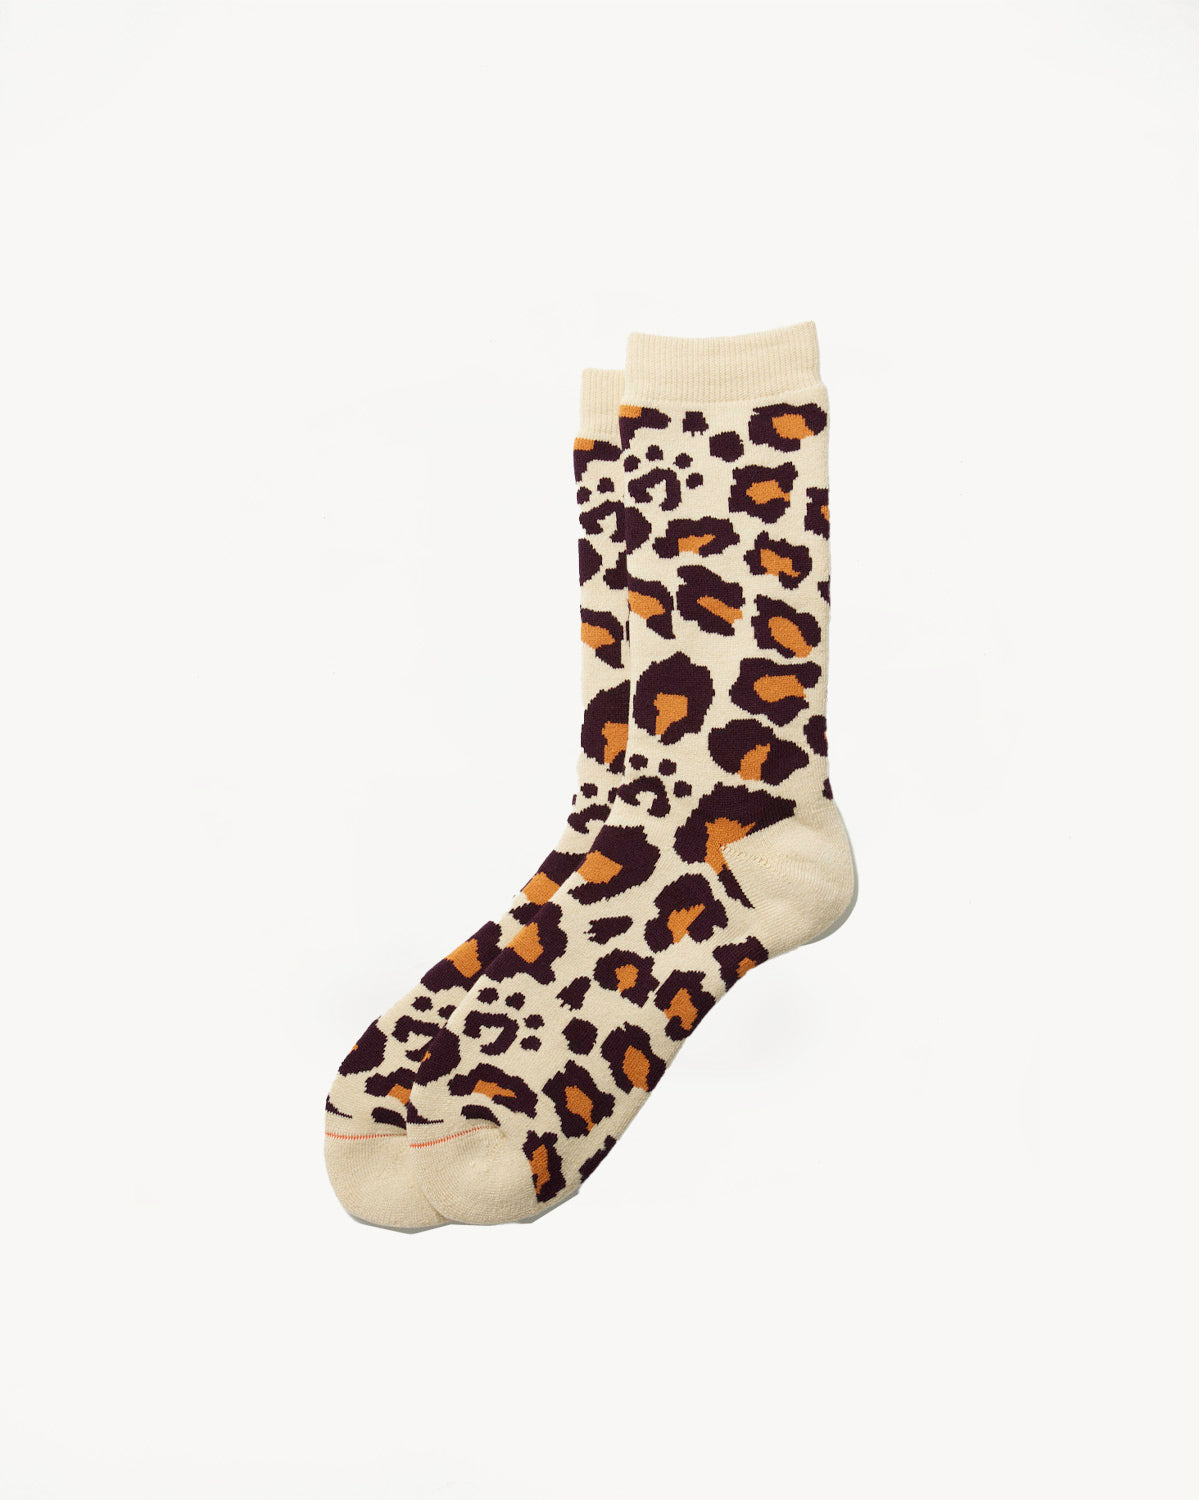 R1340 - Pile Leopard Socks - Bordeaux, Orange